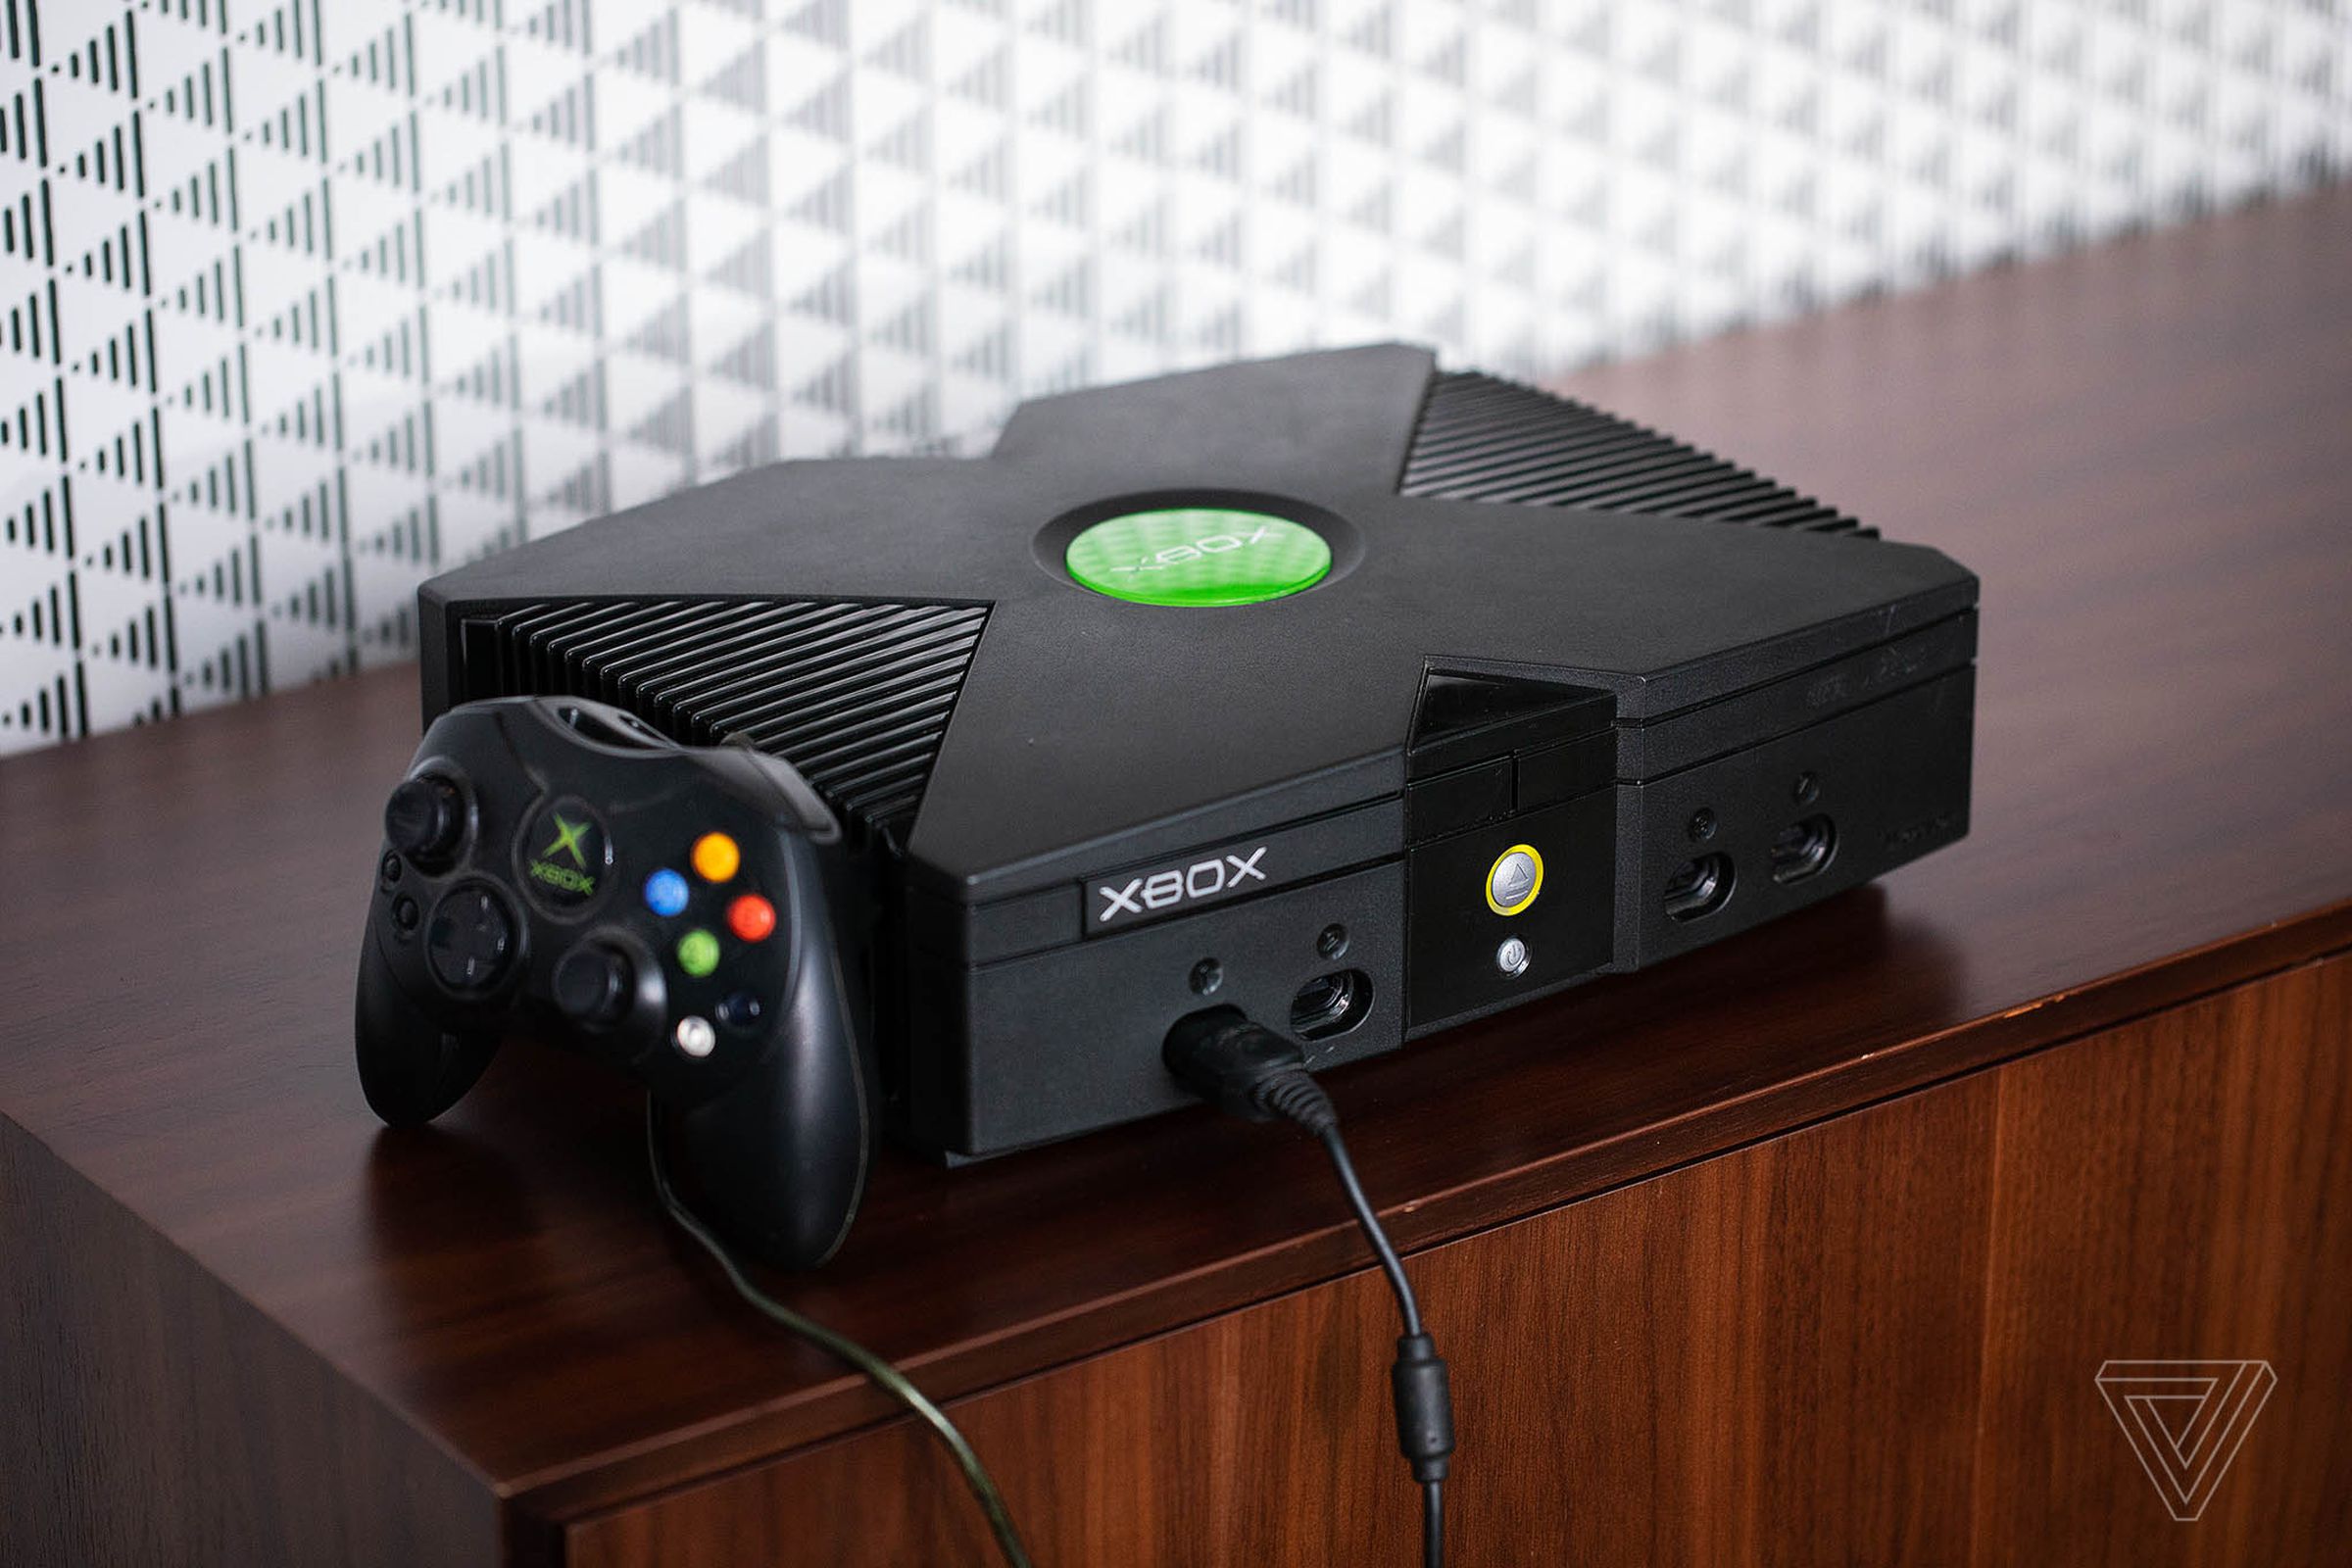 An original Xbox with an Xbox controller set next to it.